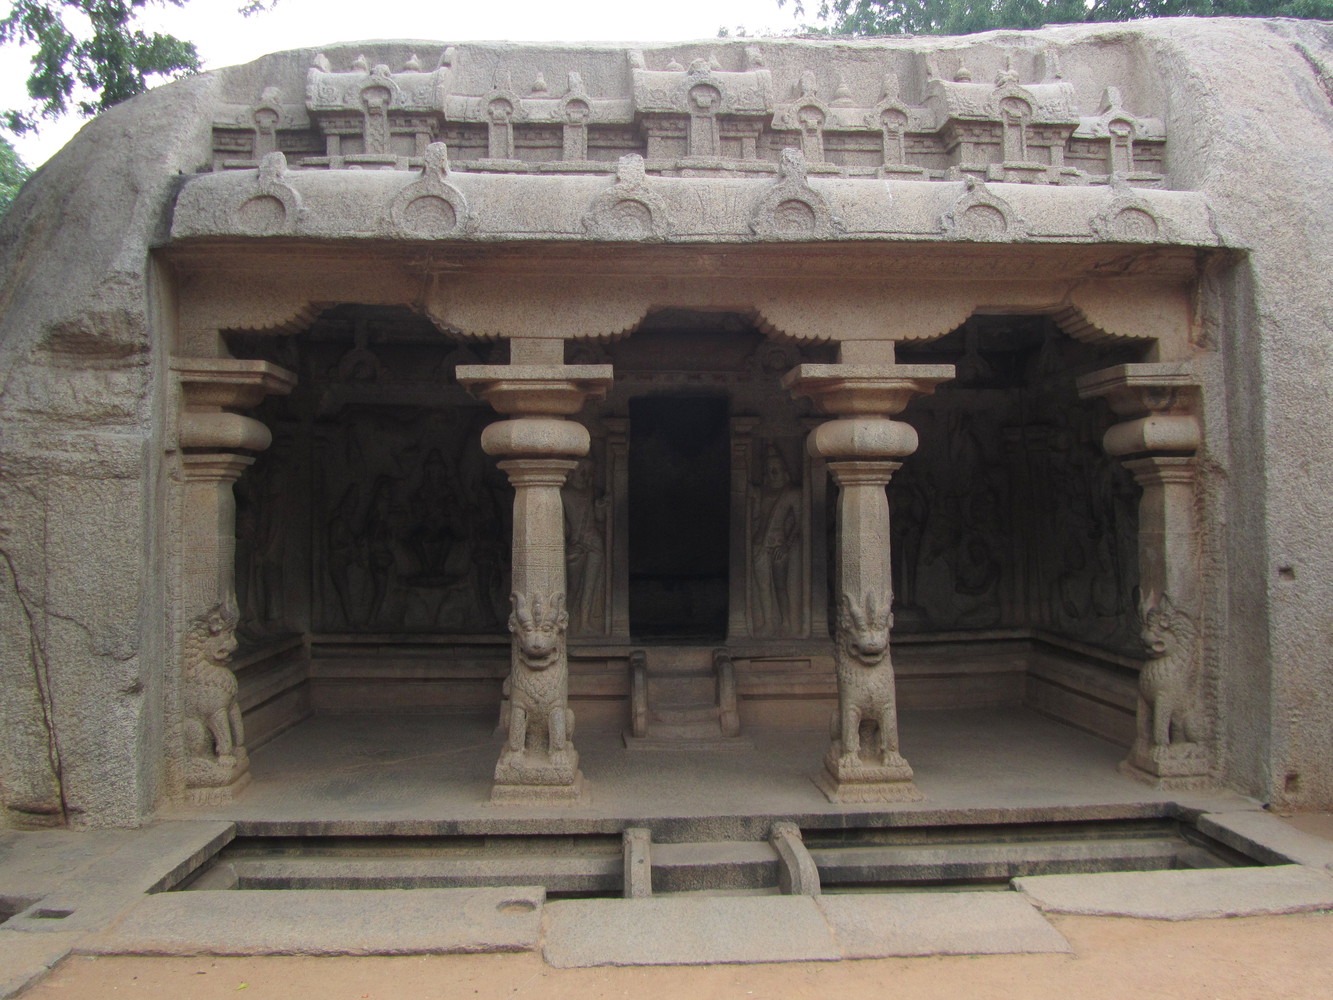 A rock-cut temple known as Varaha Cave